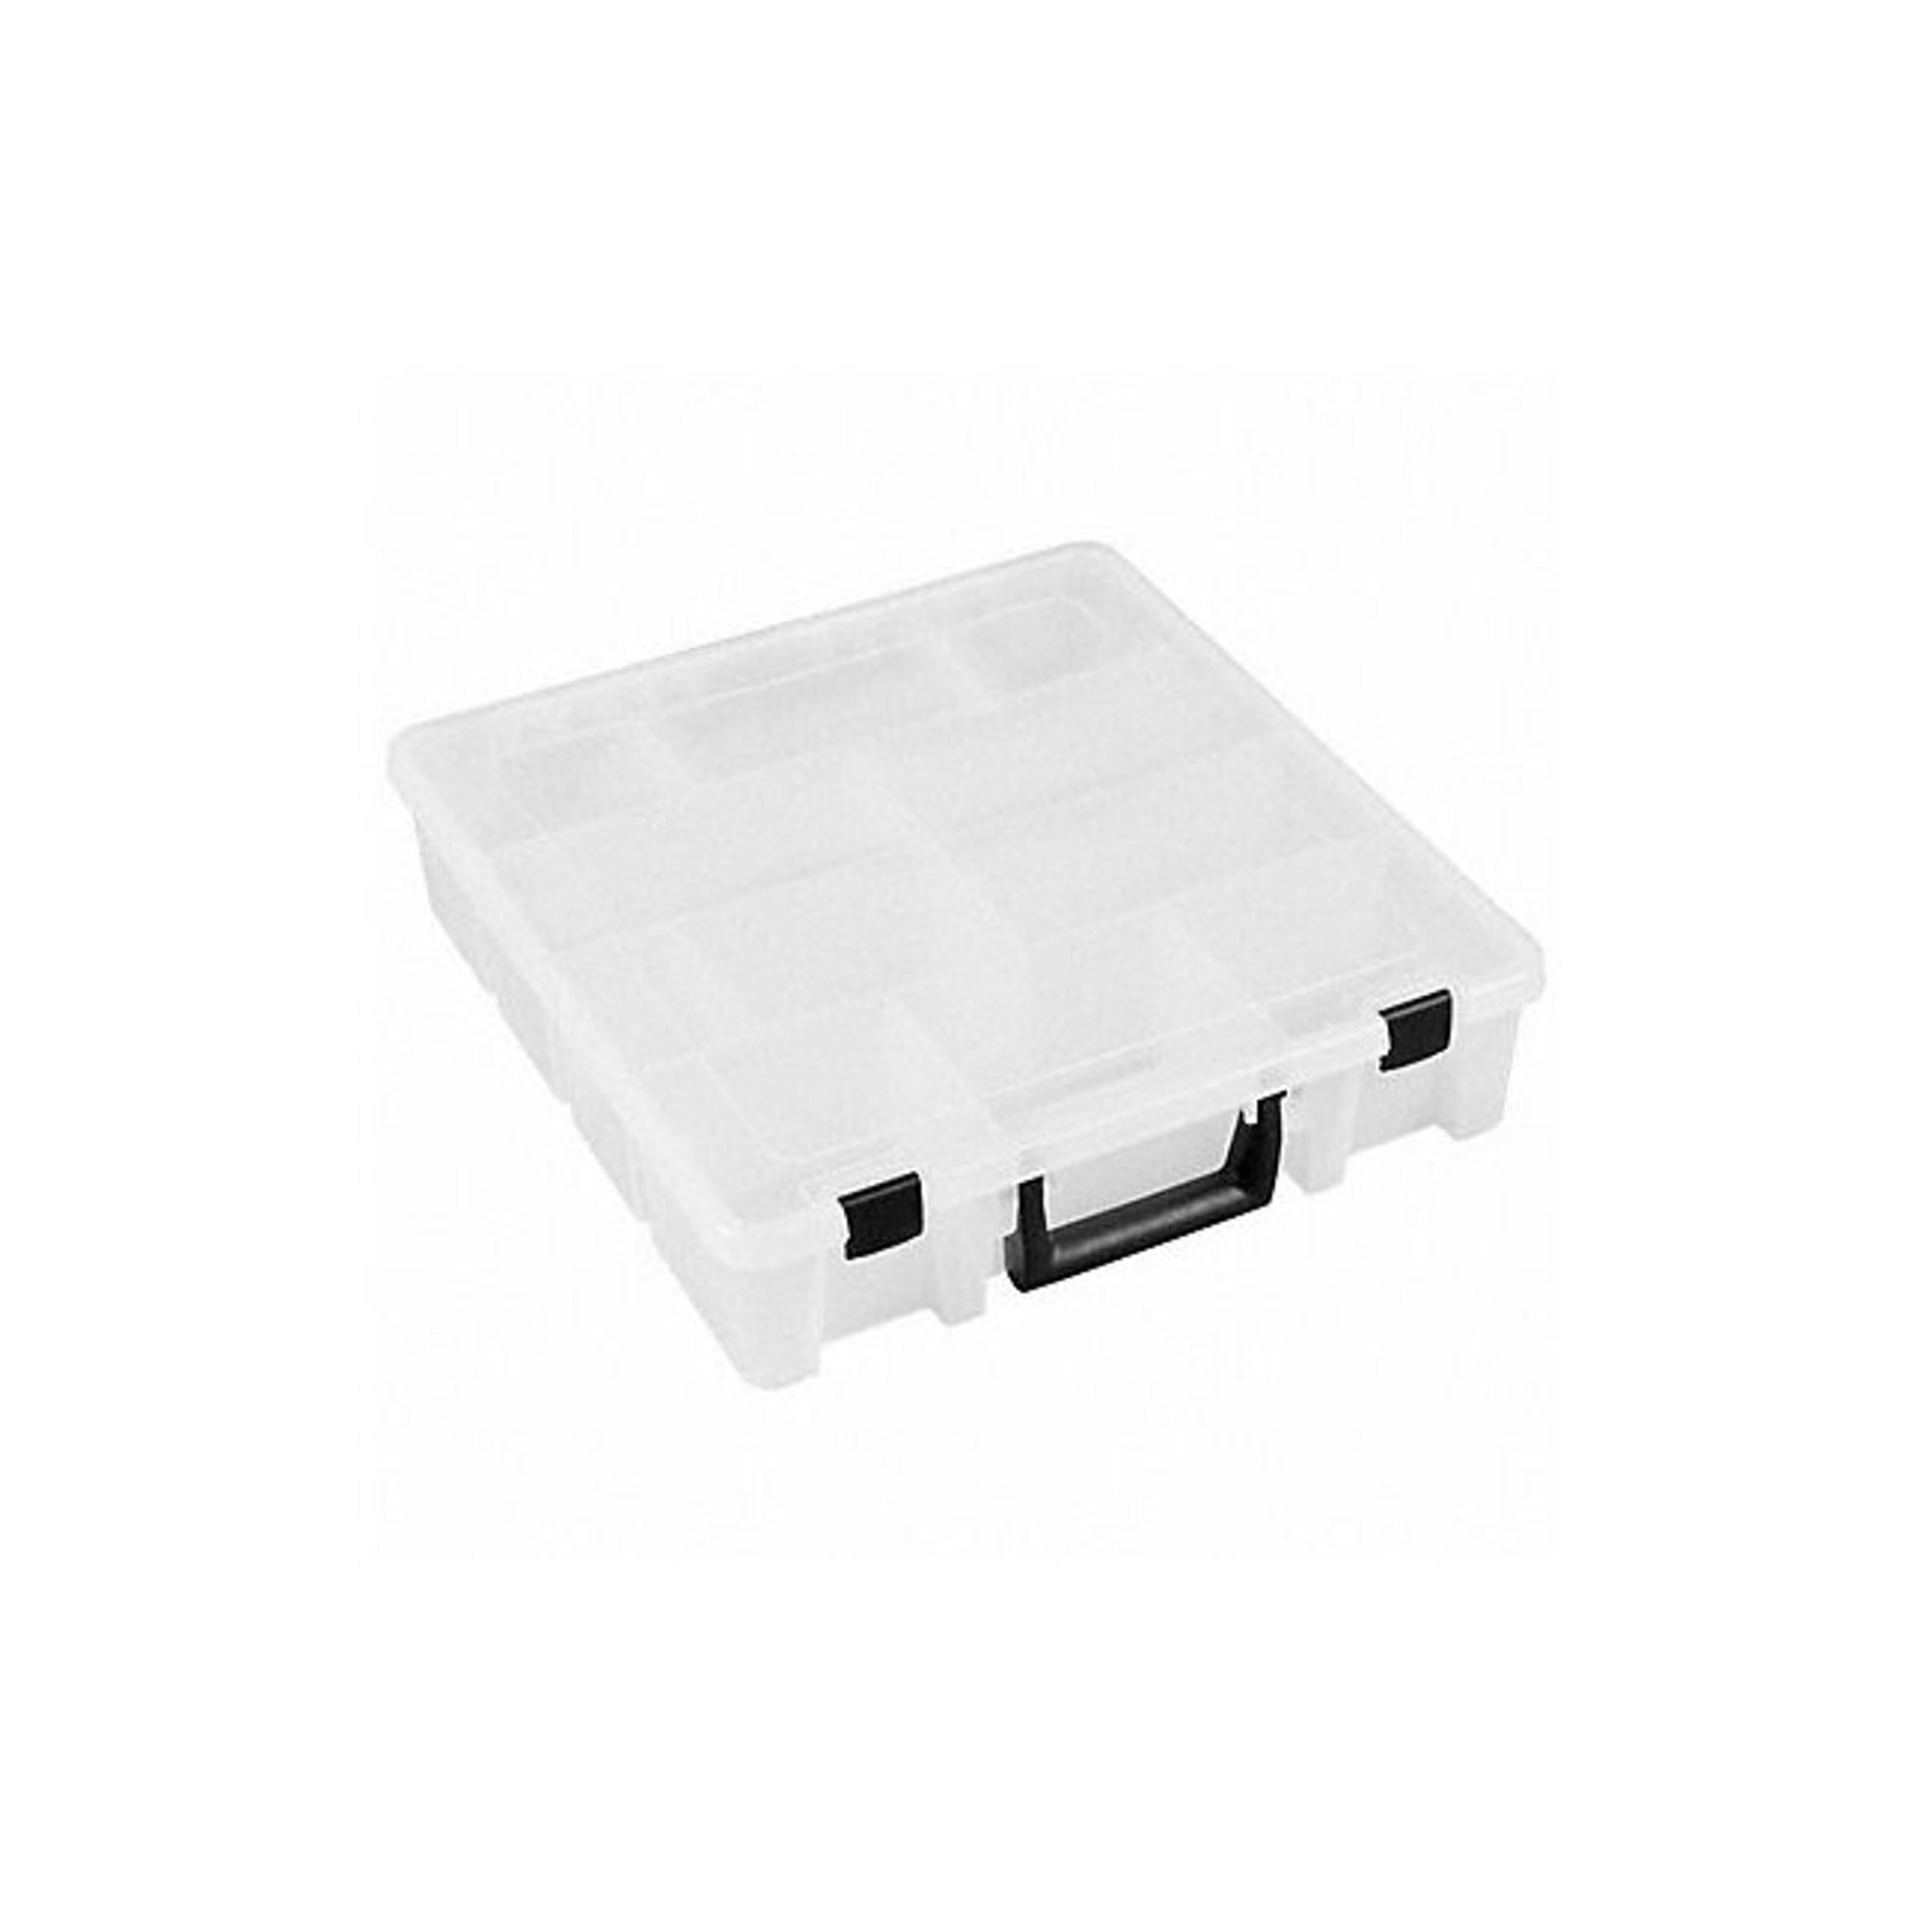 Flambeau Adjustable Compartment Box, 15 W x 14 L x 3-1/2 H, Translucent